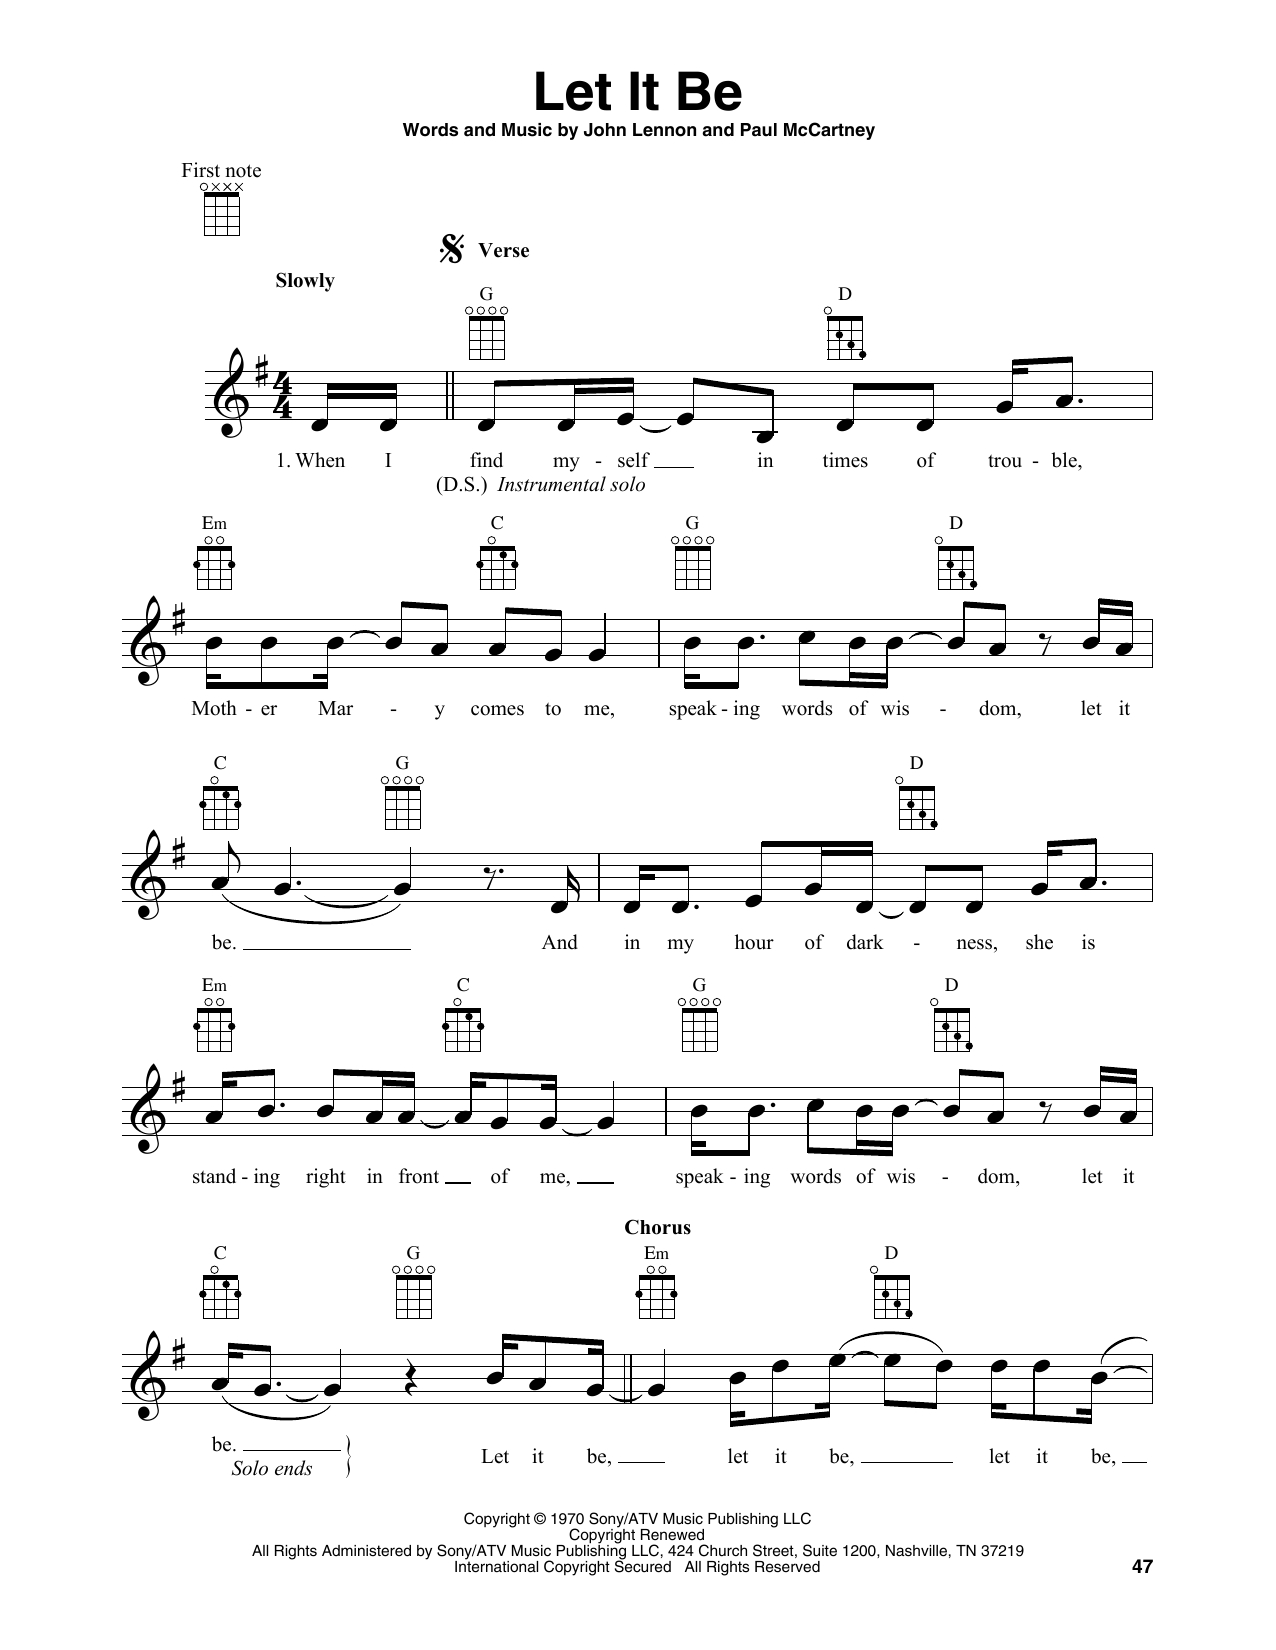 Let It Be Chords The Beatles Let It Be Sheet Music Notes Chords Download Printable Banjo Tab Sku 414950